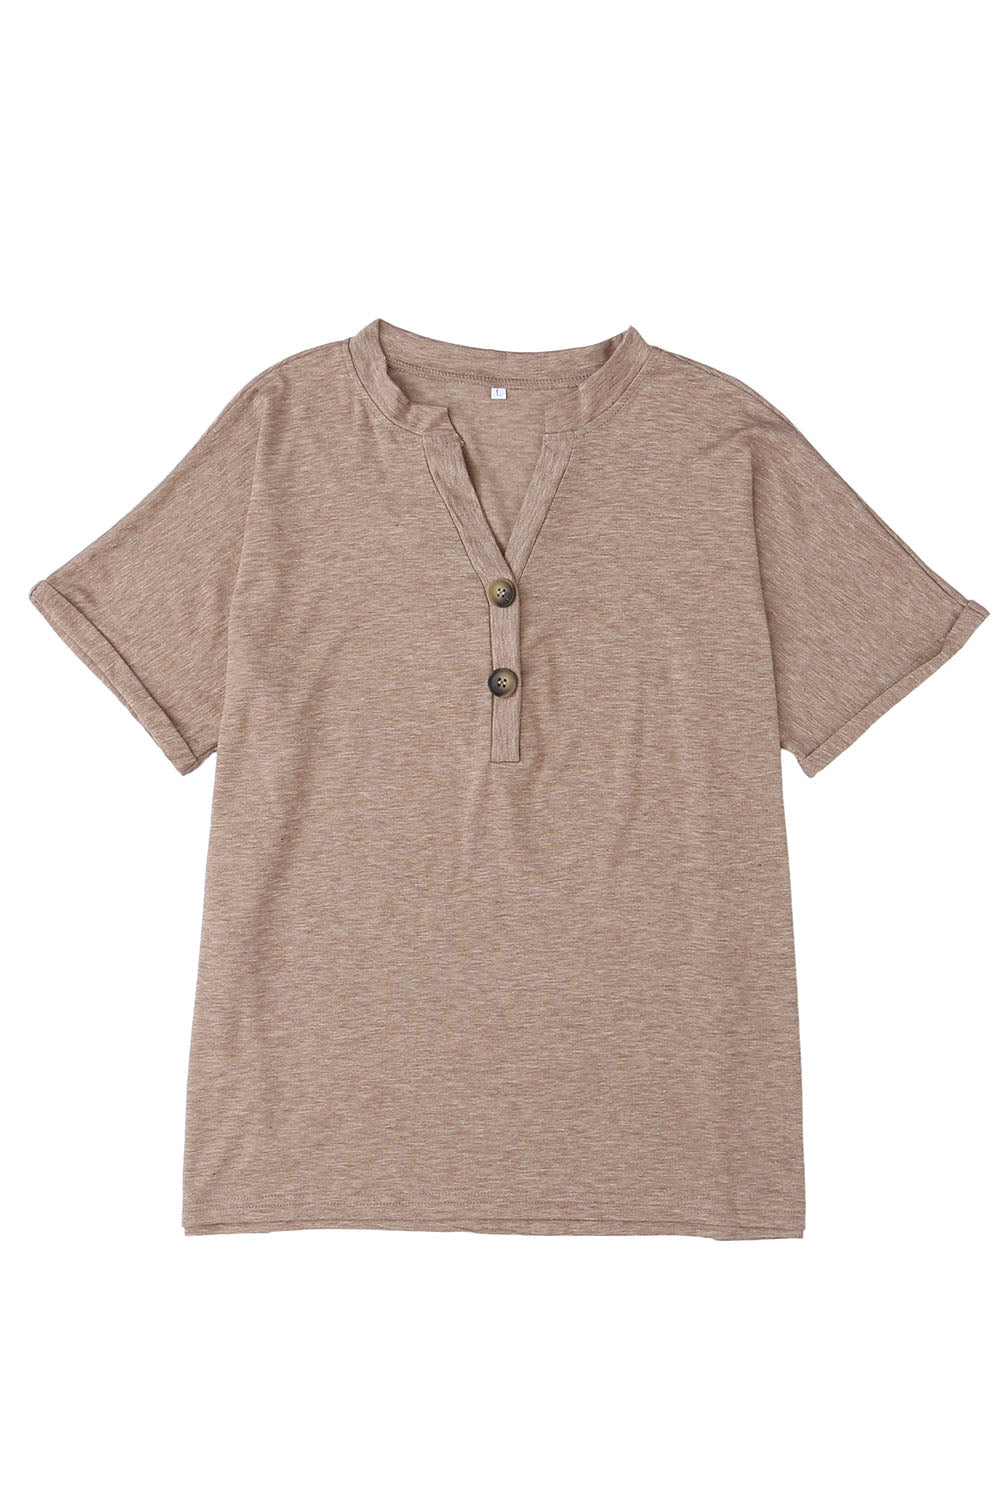 Khaki Button V Neck Rolled Short Sleeve T Shirt-13